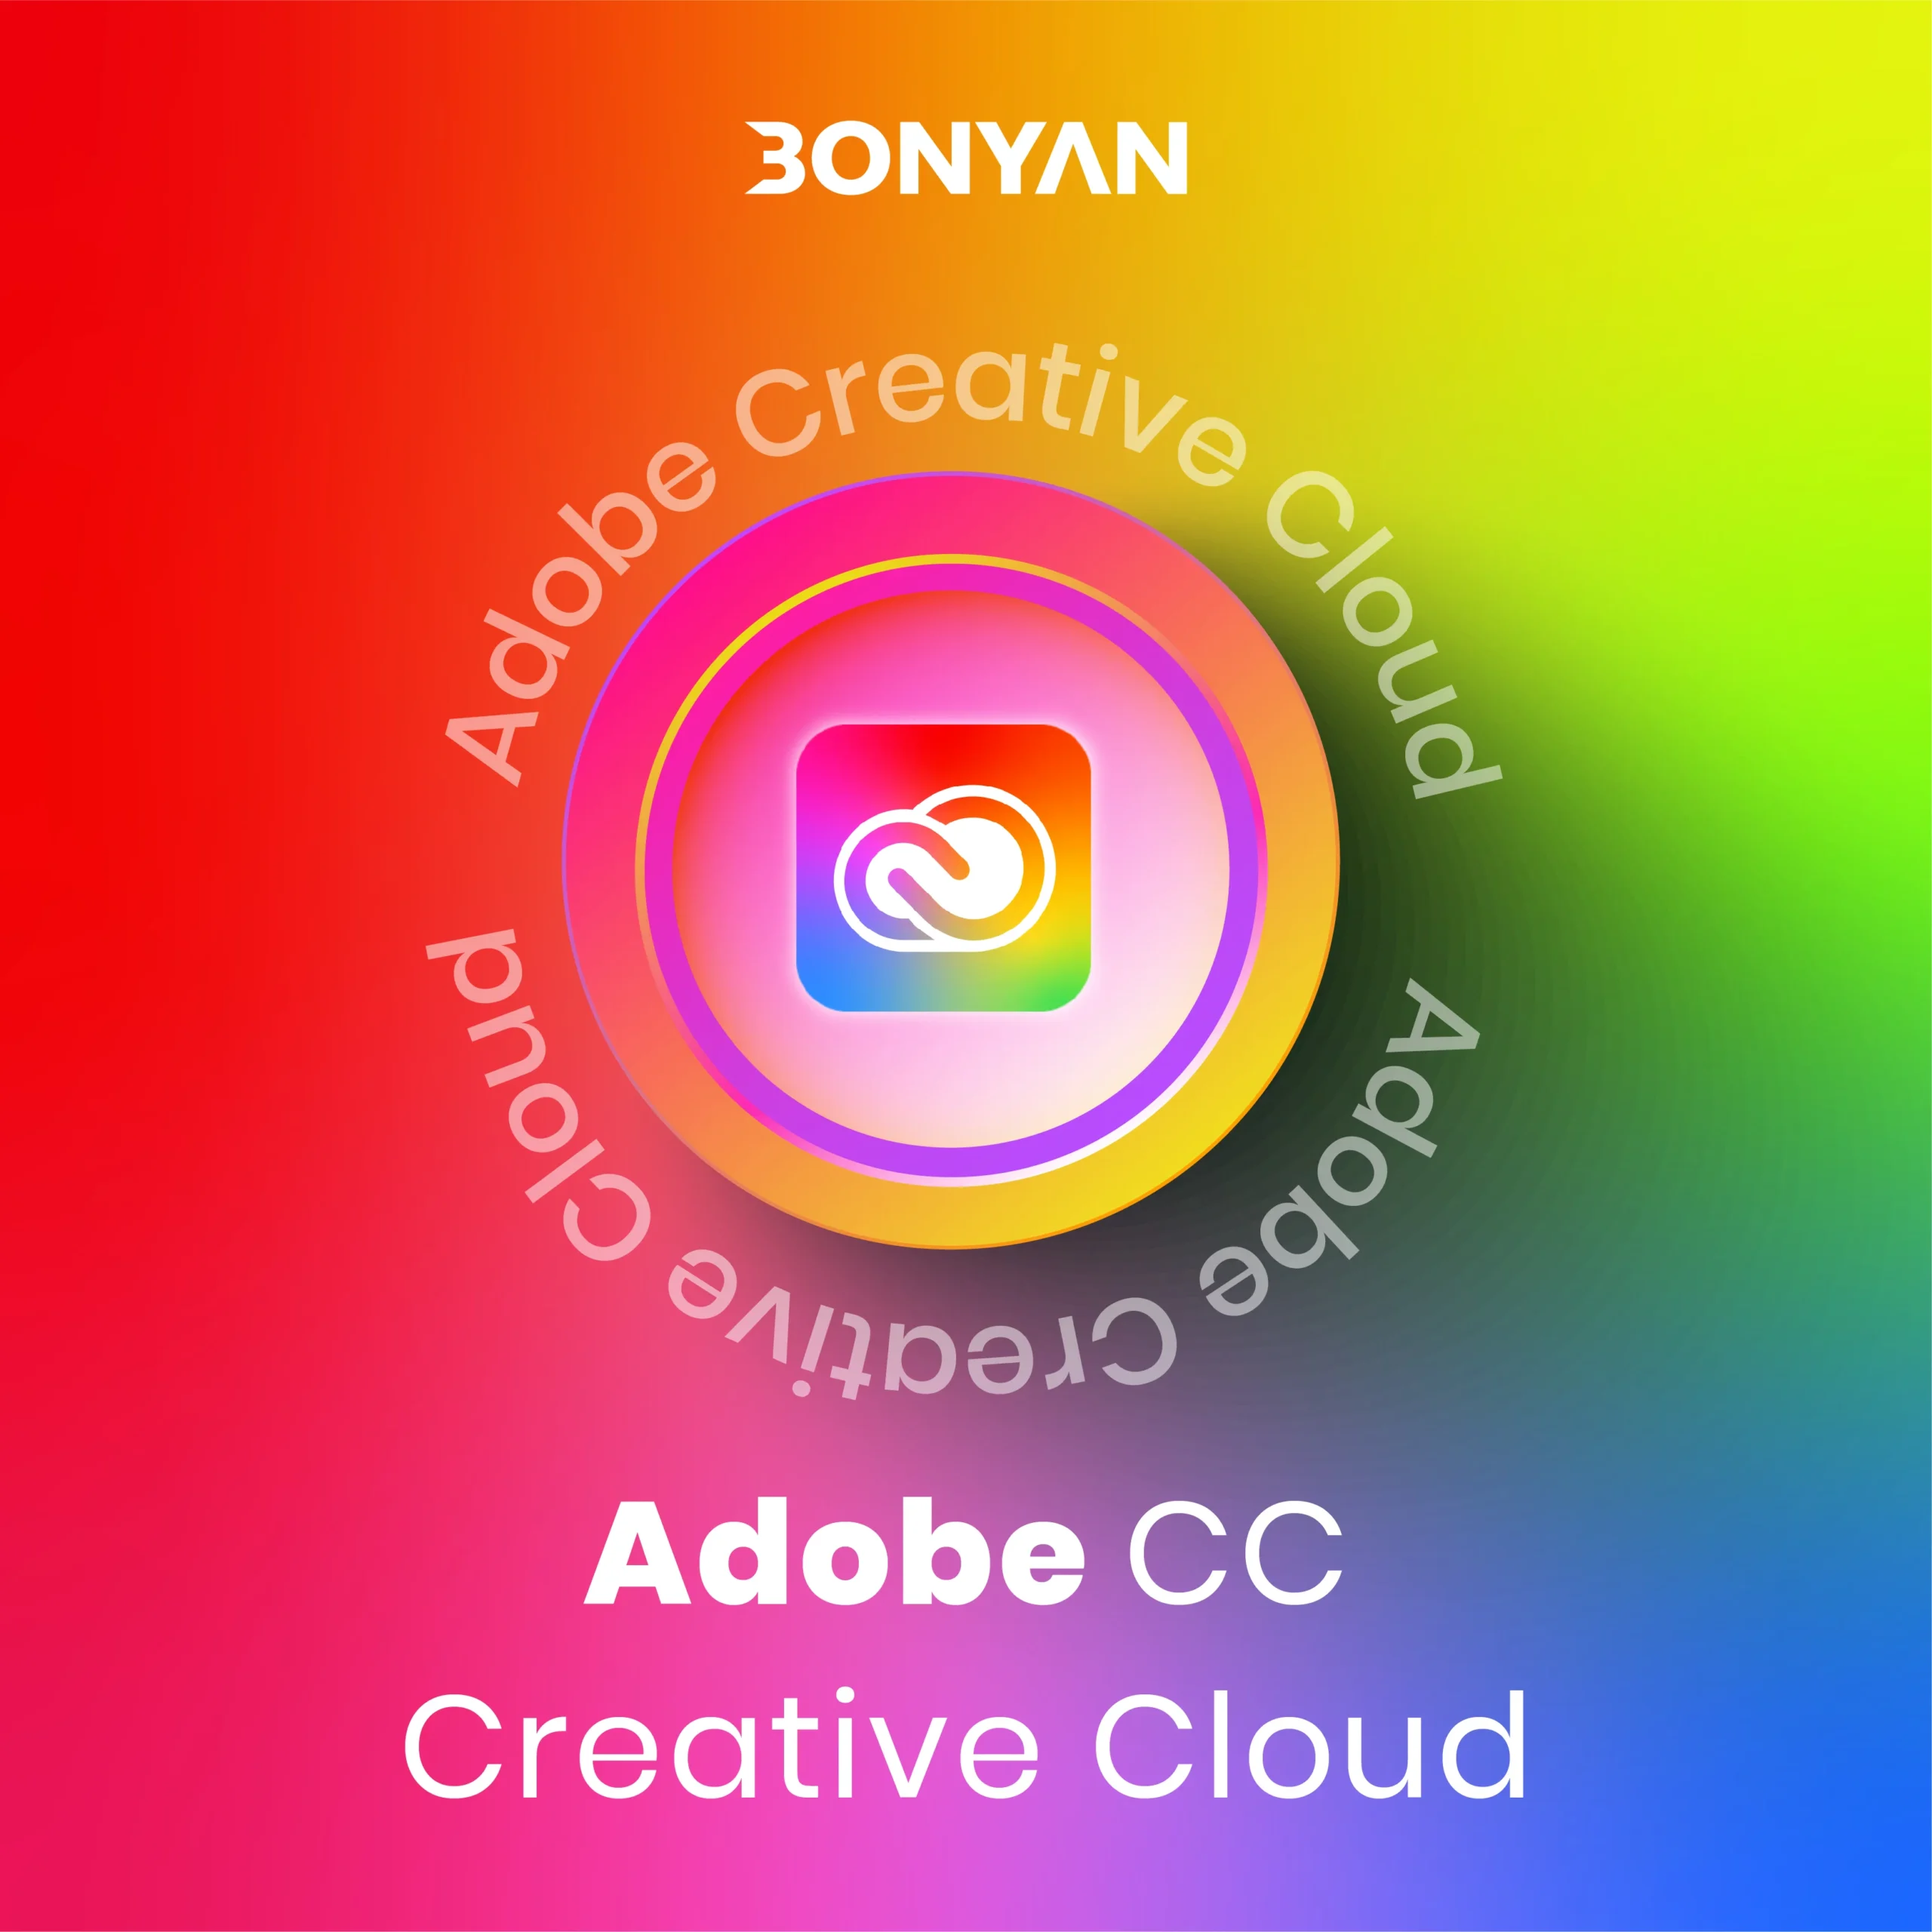 Adobe CC Creative Cloud